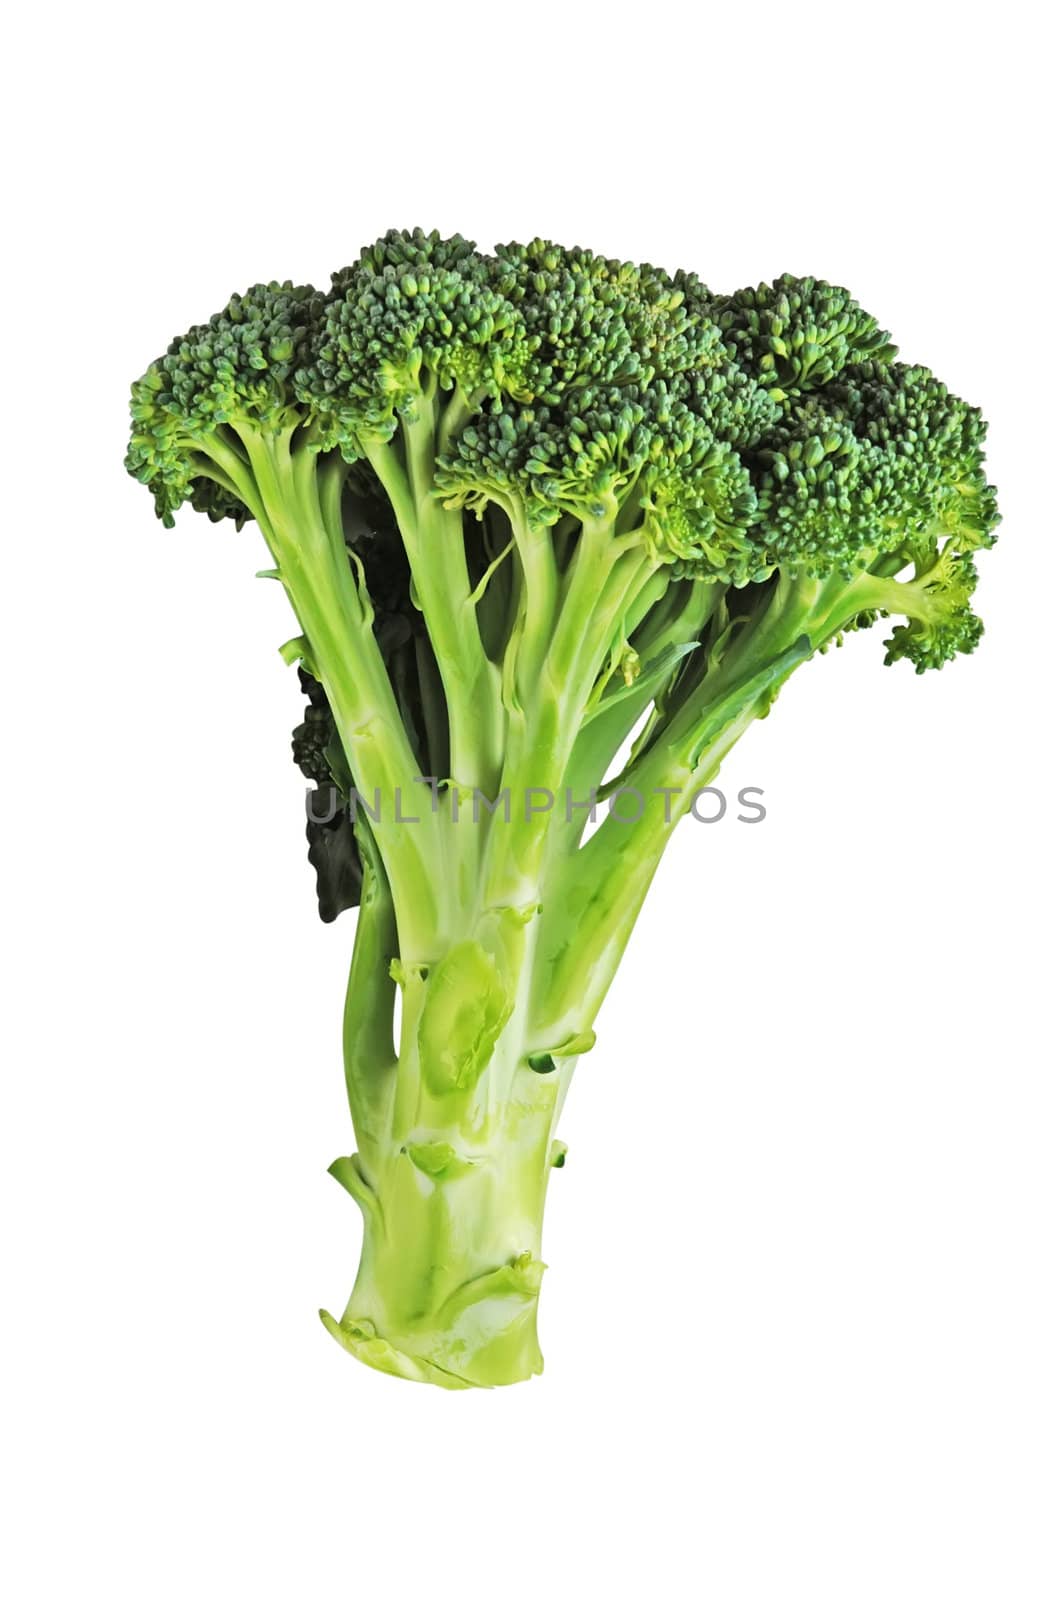 Broccoli Floret by dehooks